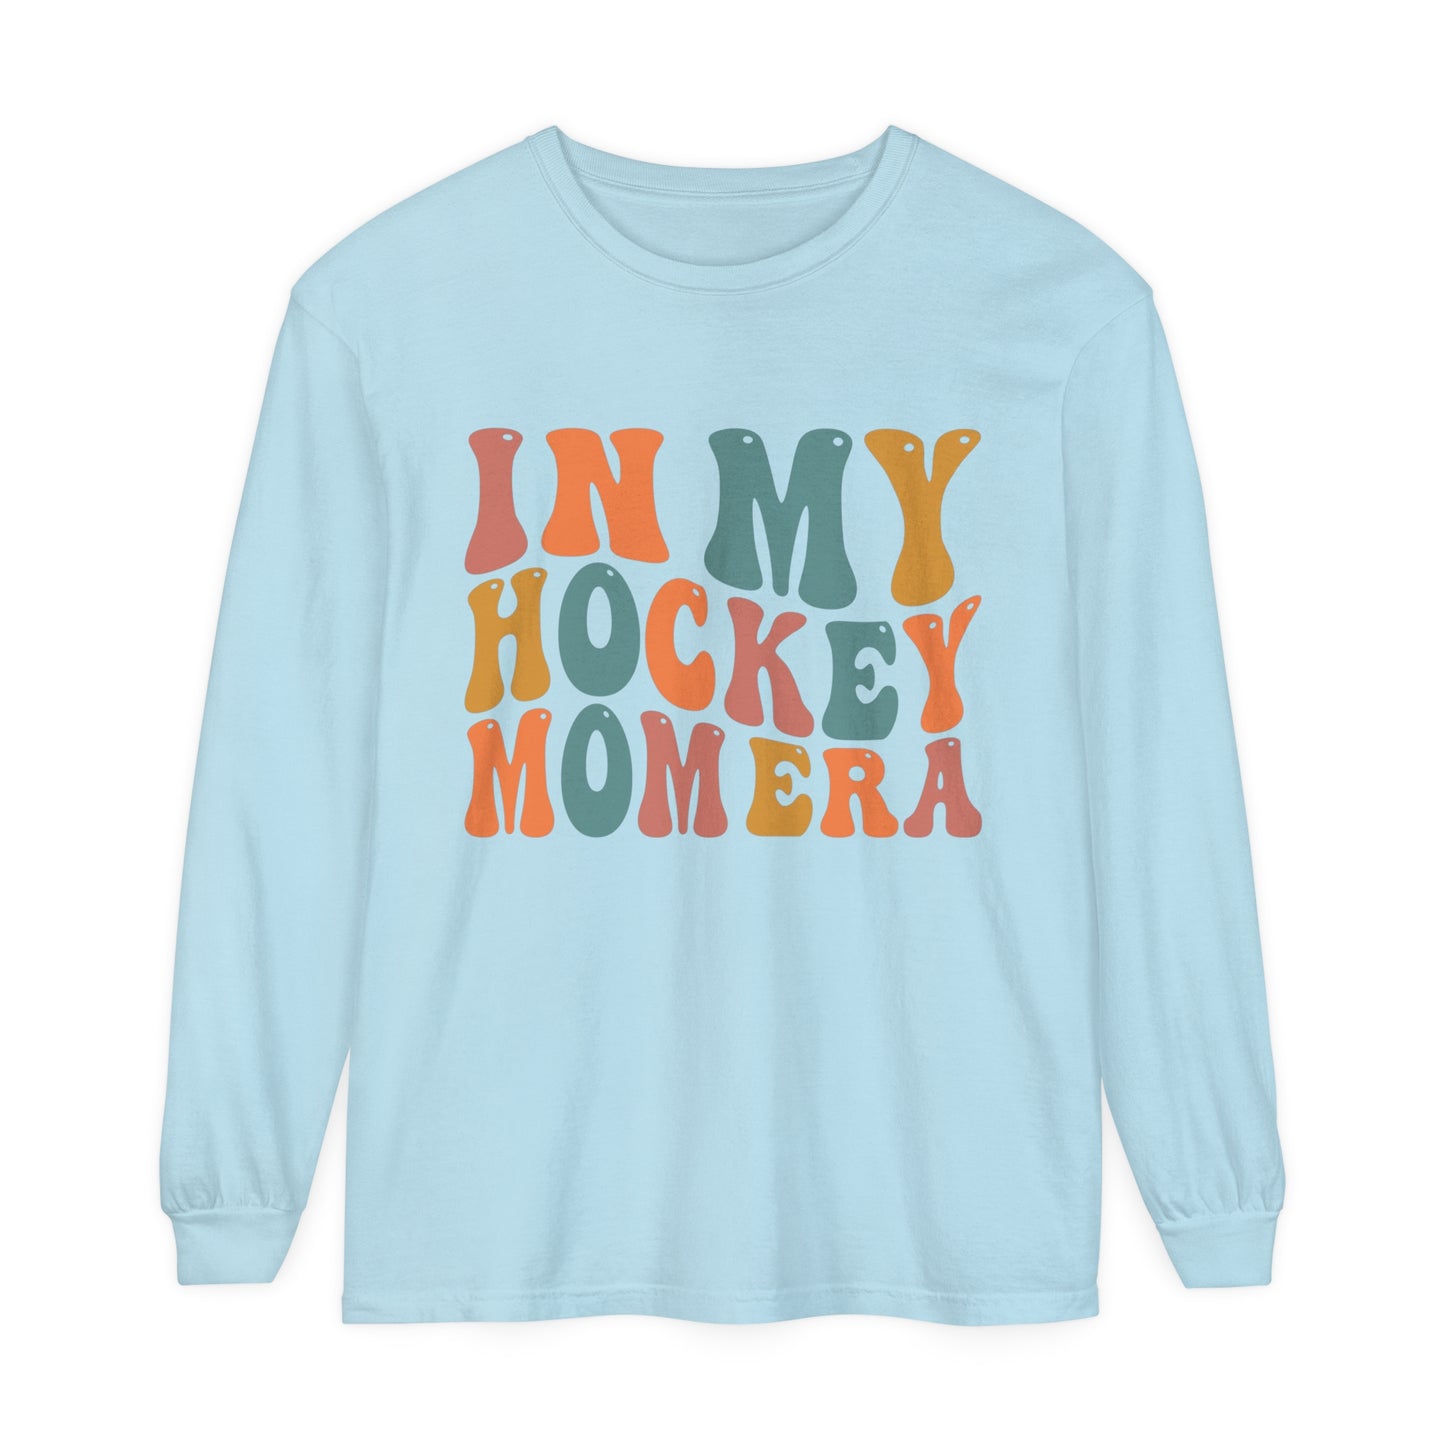 In my hockey mom era loose long sleeve women's  T-Shirt